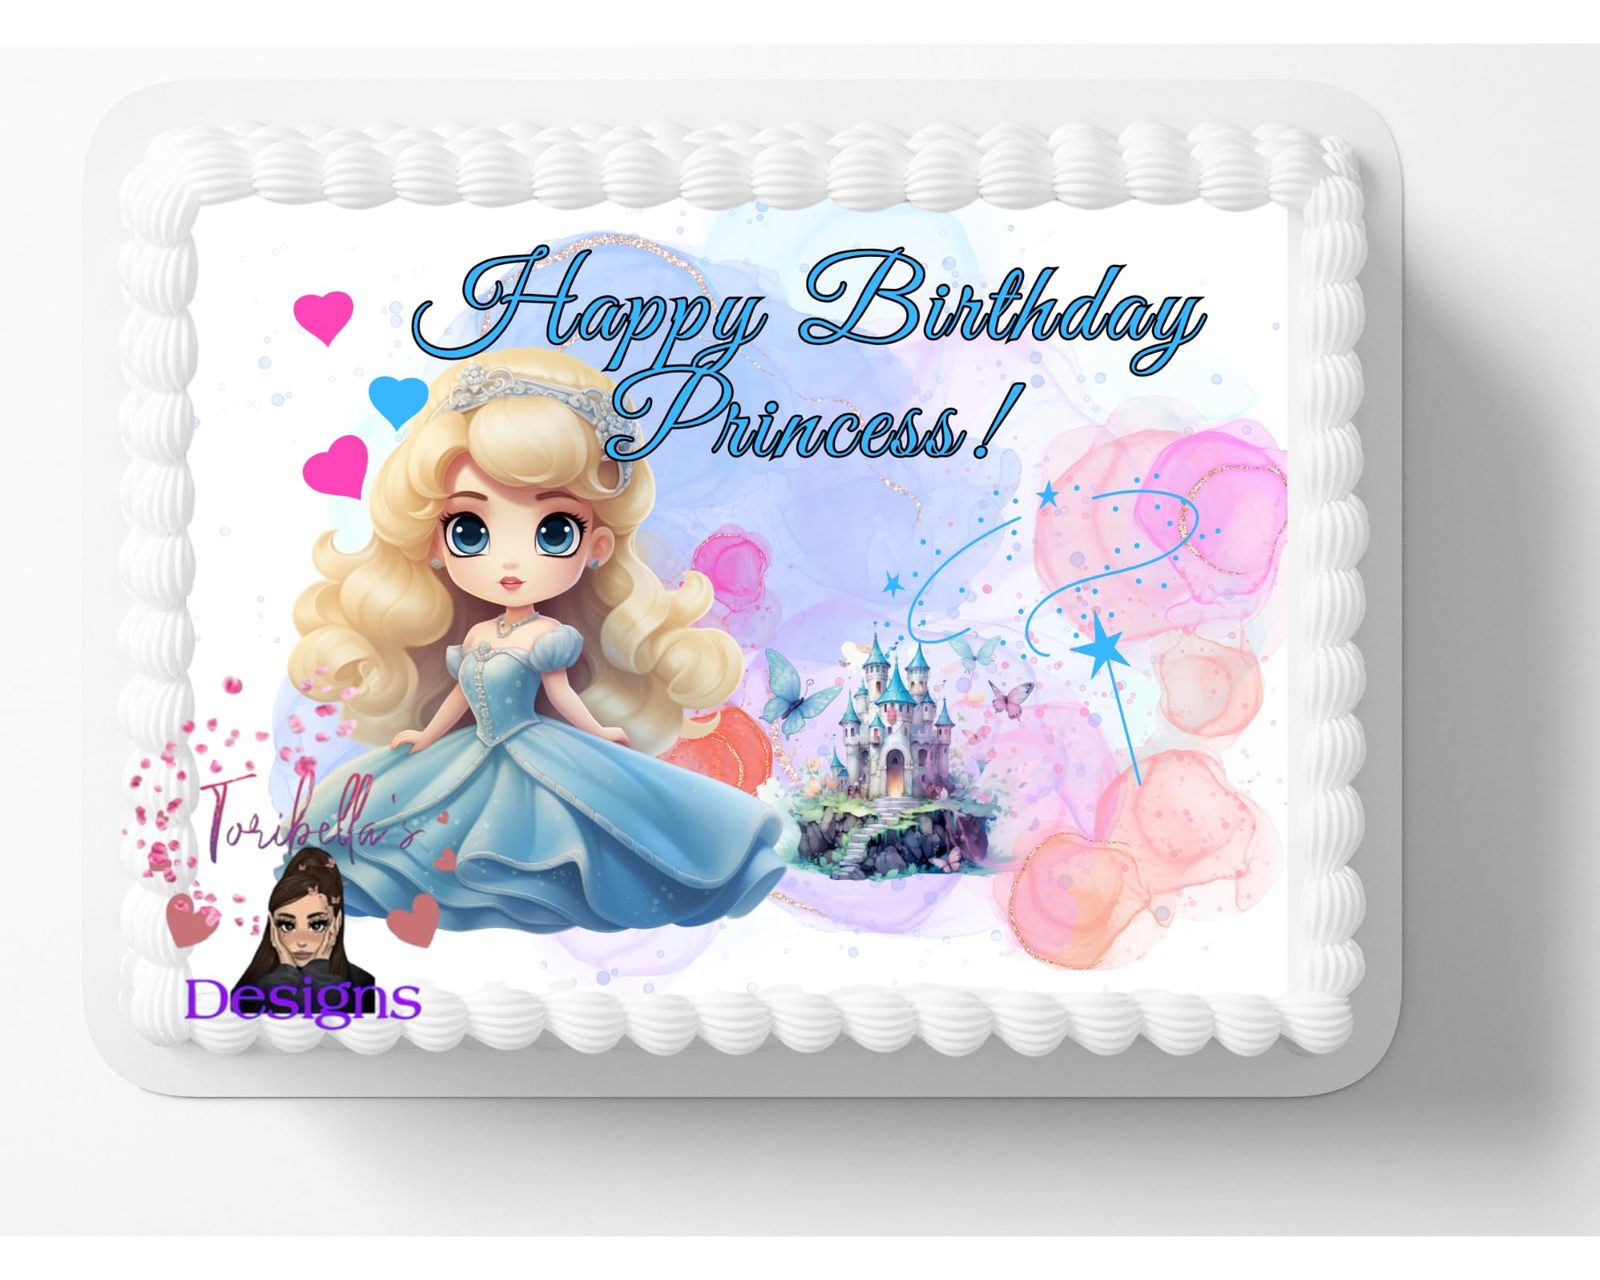 Personalized Happy Birthday Glass Slipper Princess Edible Image Princess Design  - $16.47